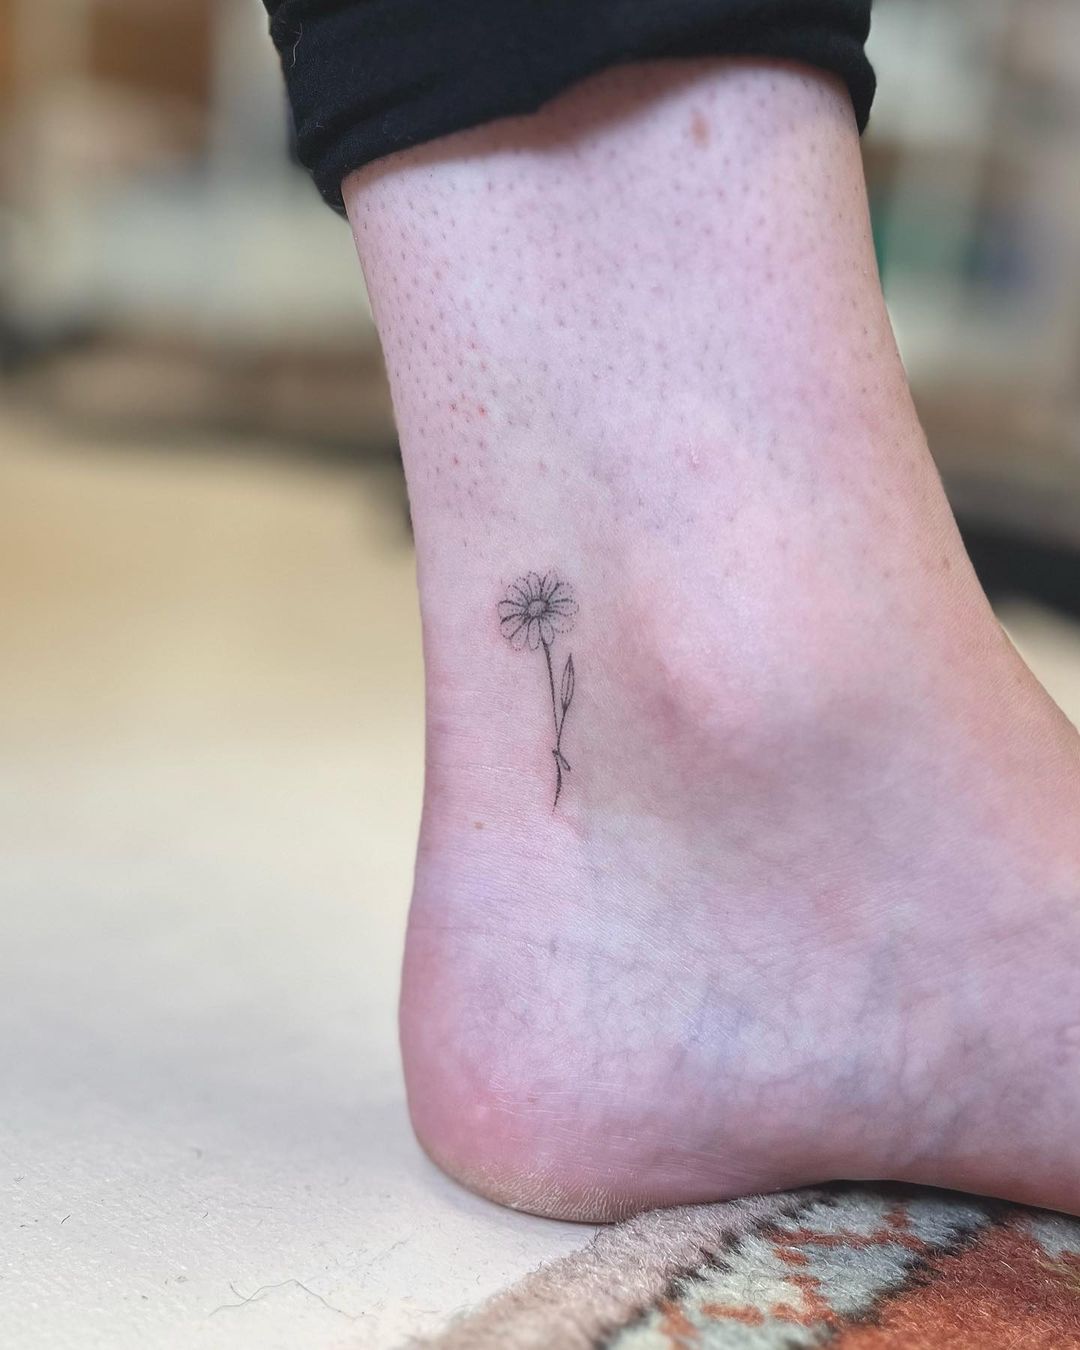 small flower tattoo on feet for men by pokesbyamy